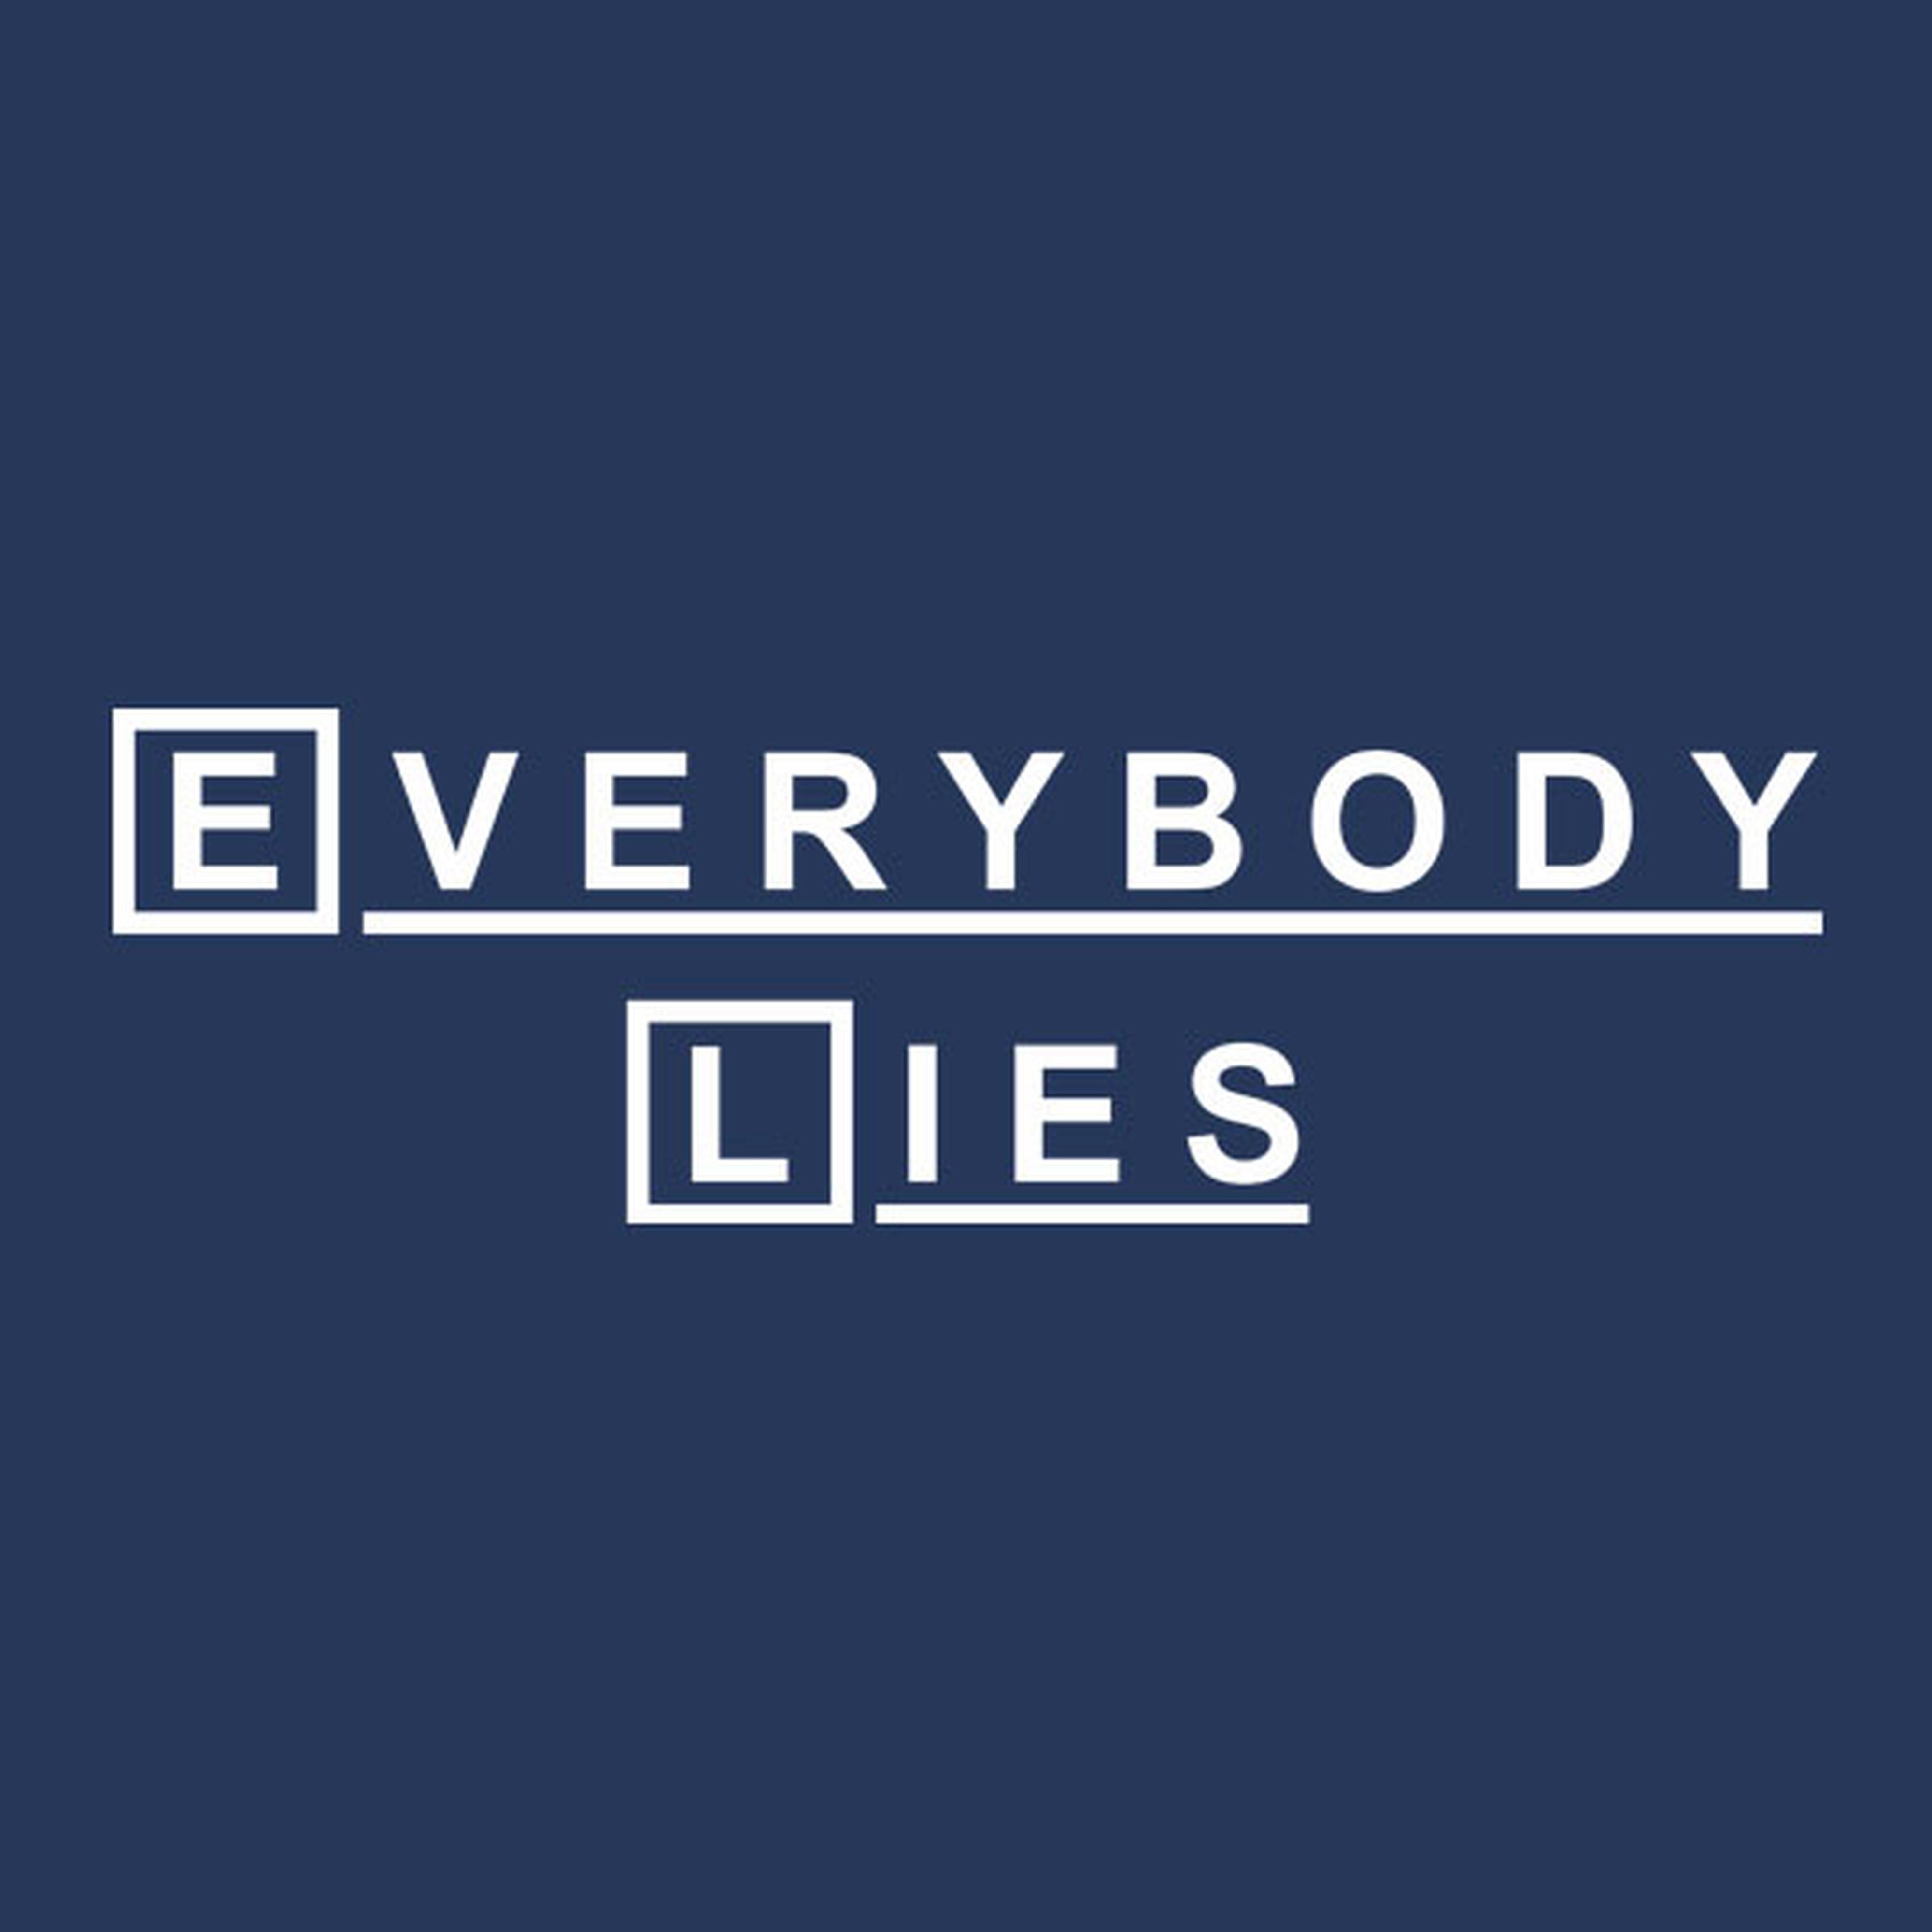 Everybody lies - T-shirt